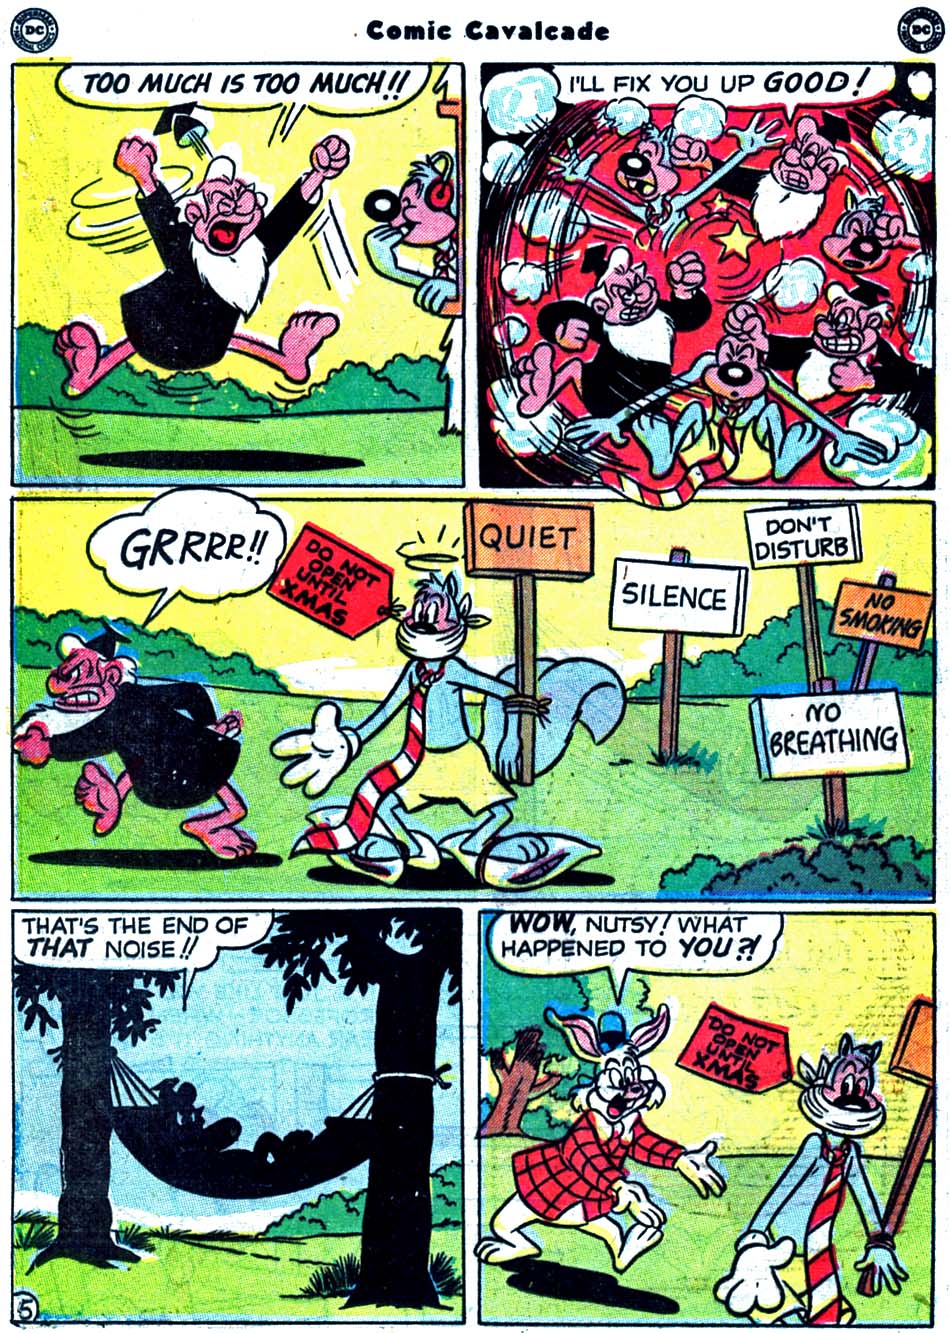 Comic Cavalcade issue 44 - Page 64